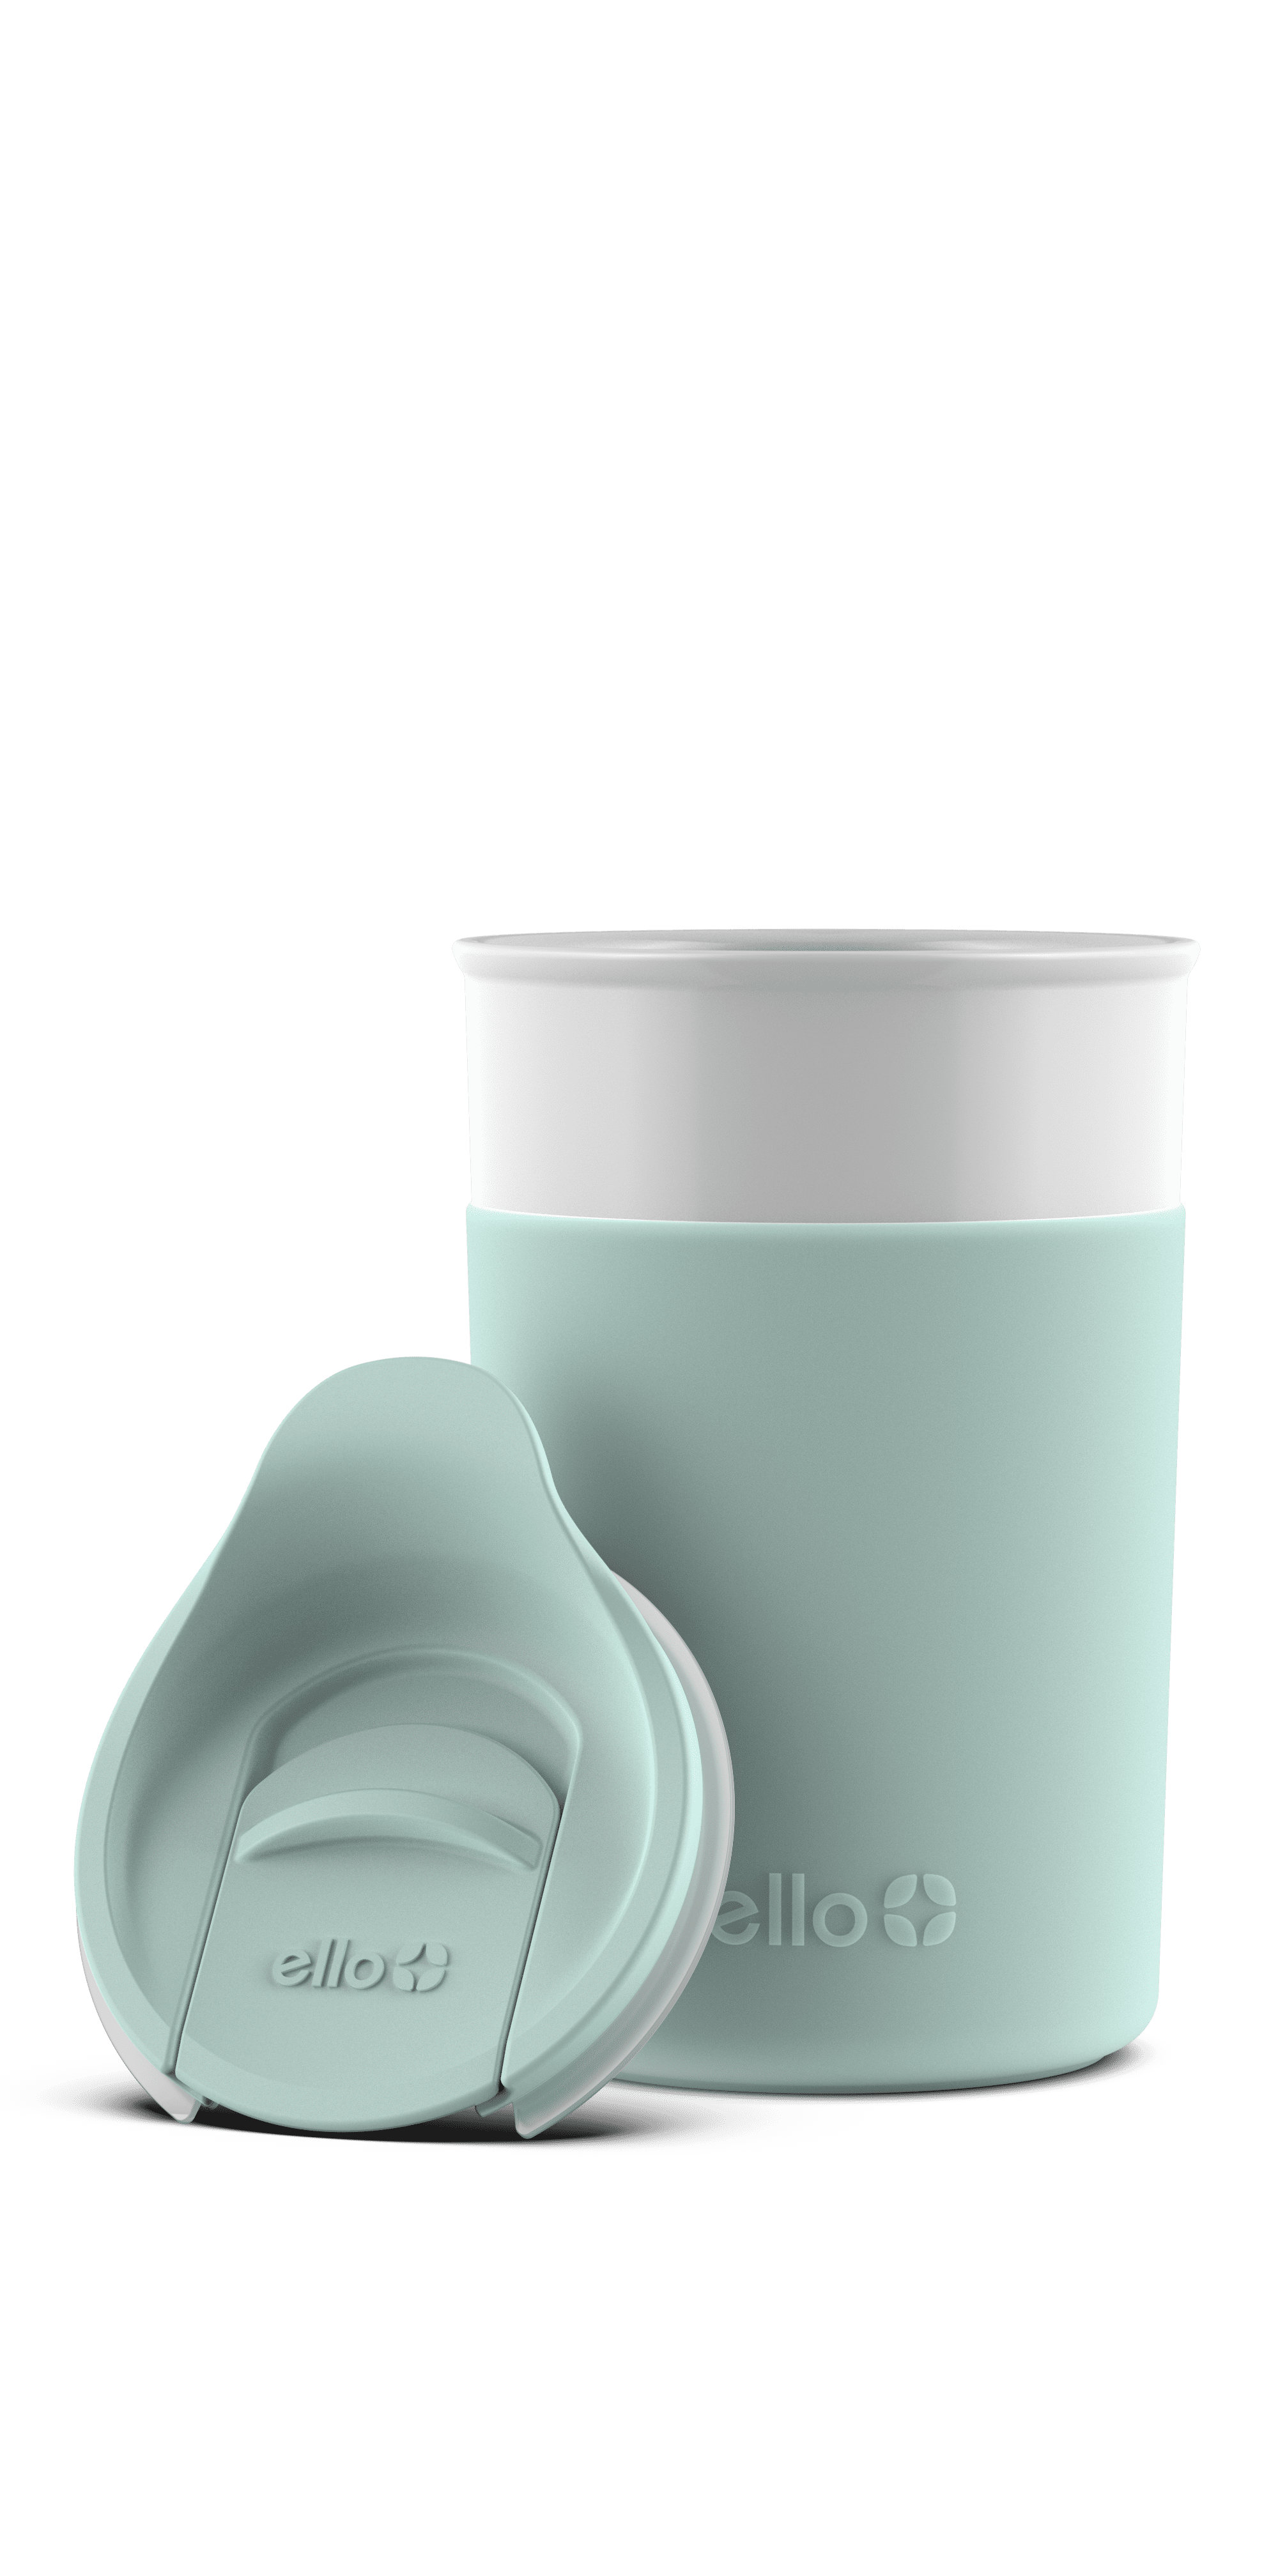 Ello Coffee Tea Drink Travel Mug Cup Gray Stripes Ceramic Tumbler 12o -  household items - by owner - housewares sale 